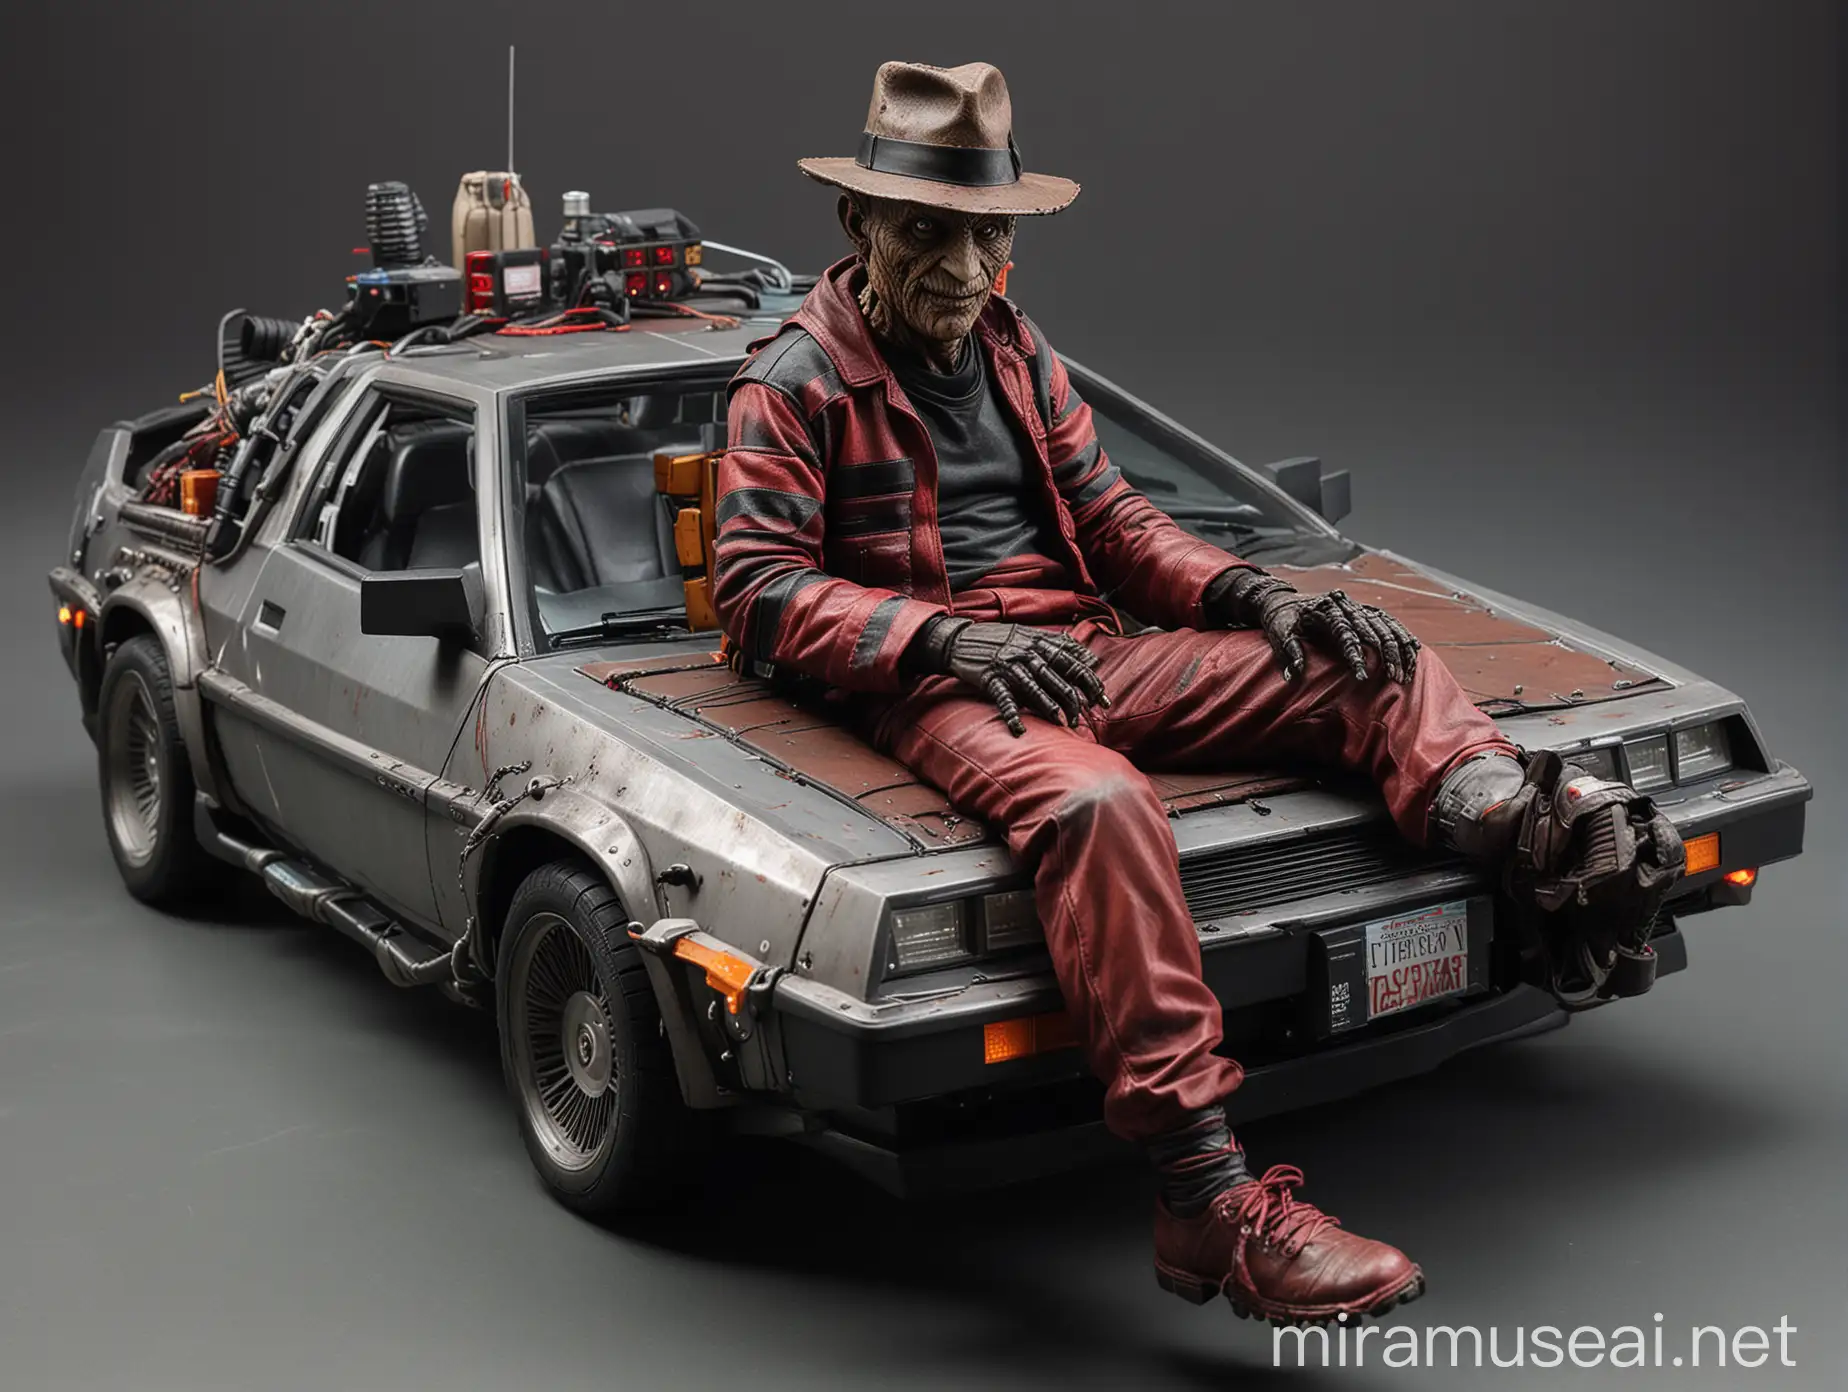  Cyberpunk Freddy Krueger sitting on Back to the Future DeLorean